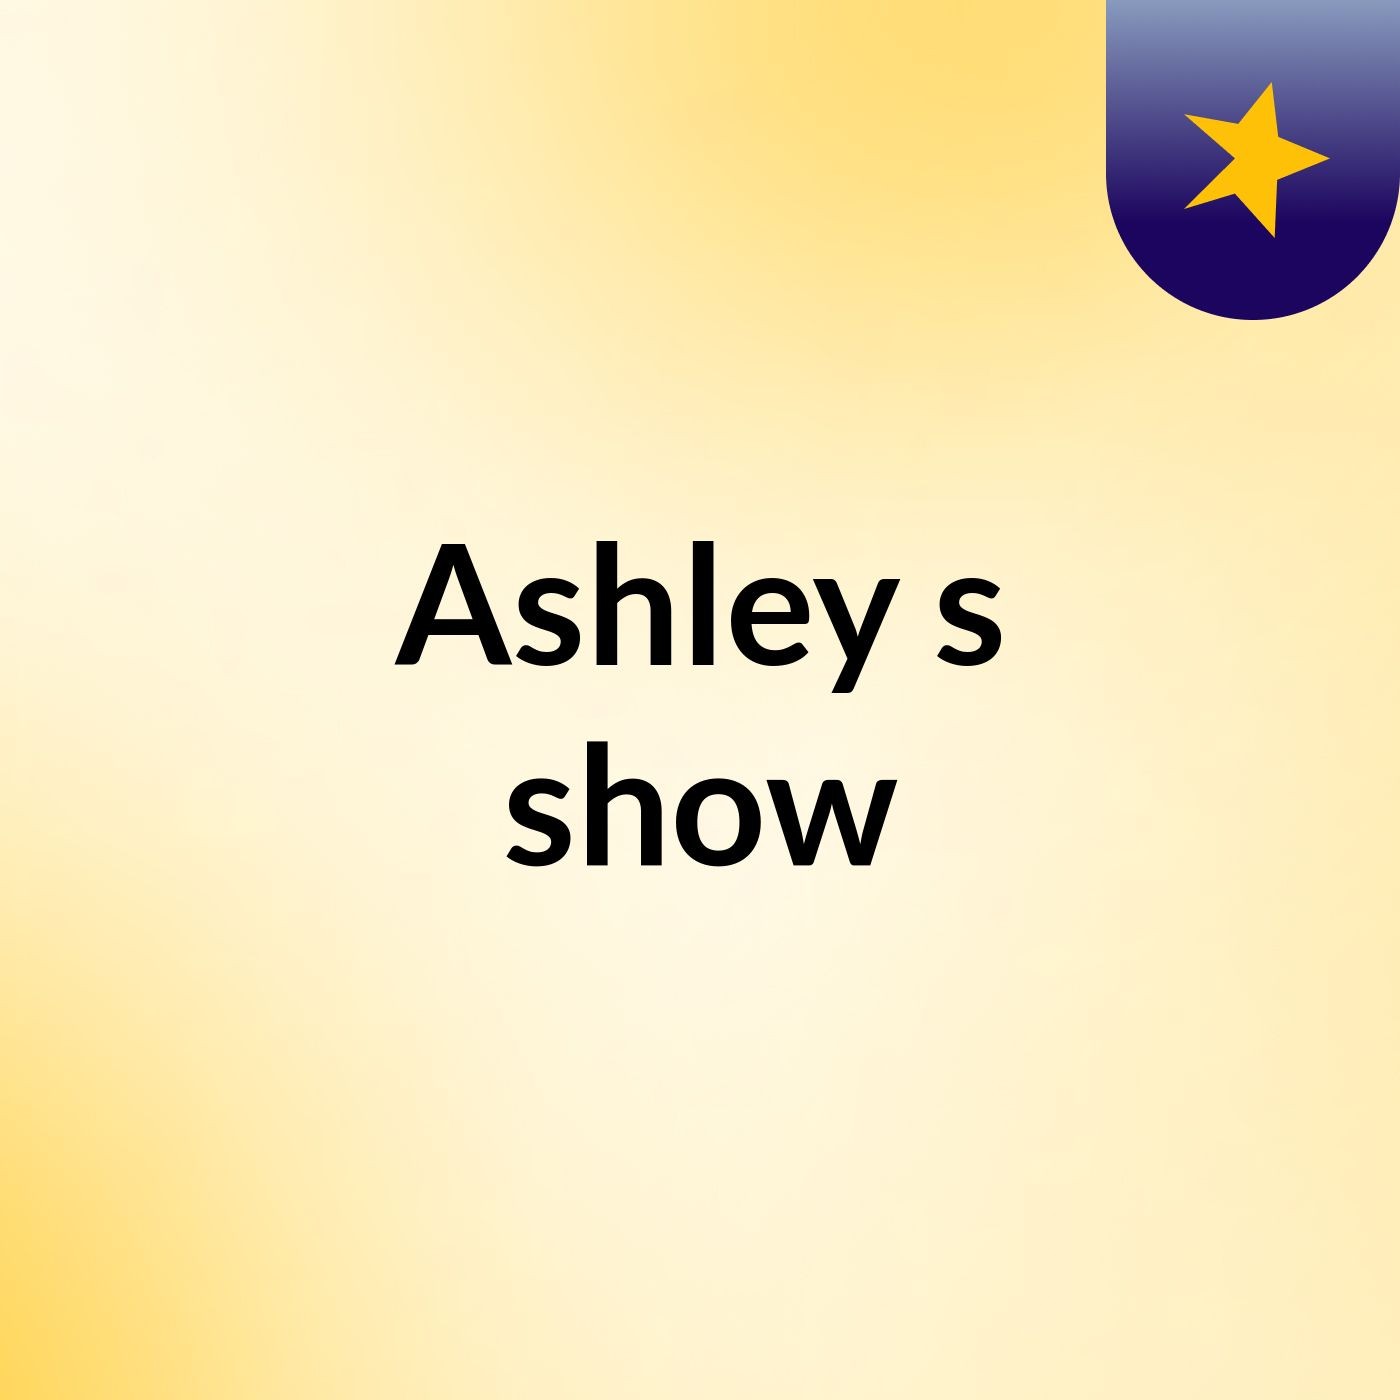 Ashley's show